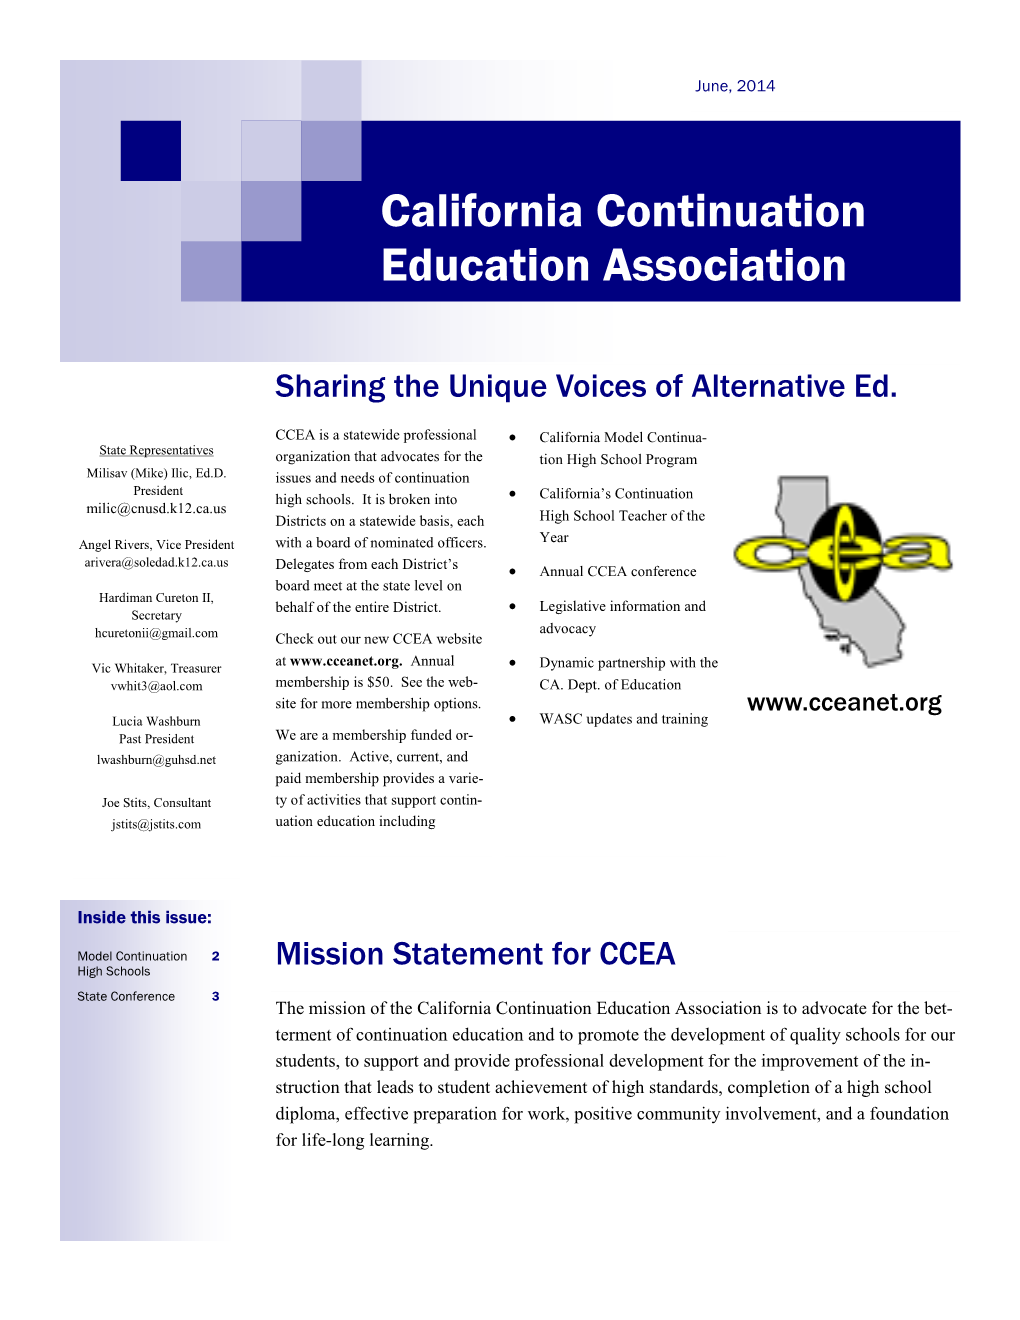 California Continuation Education Association